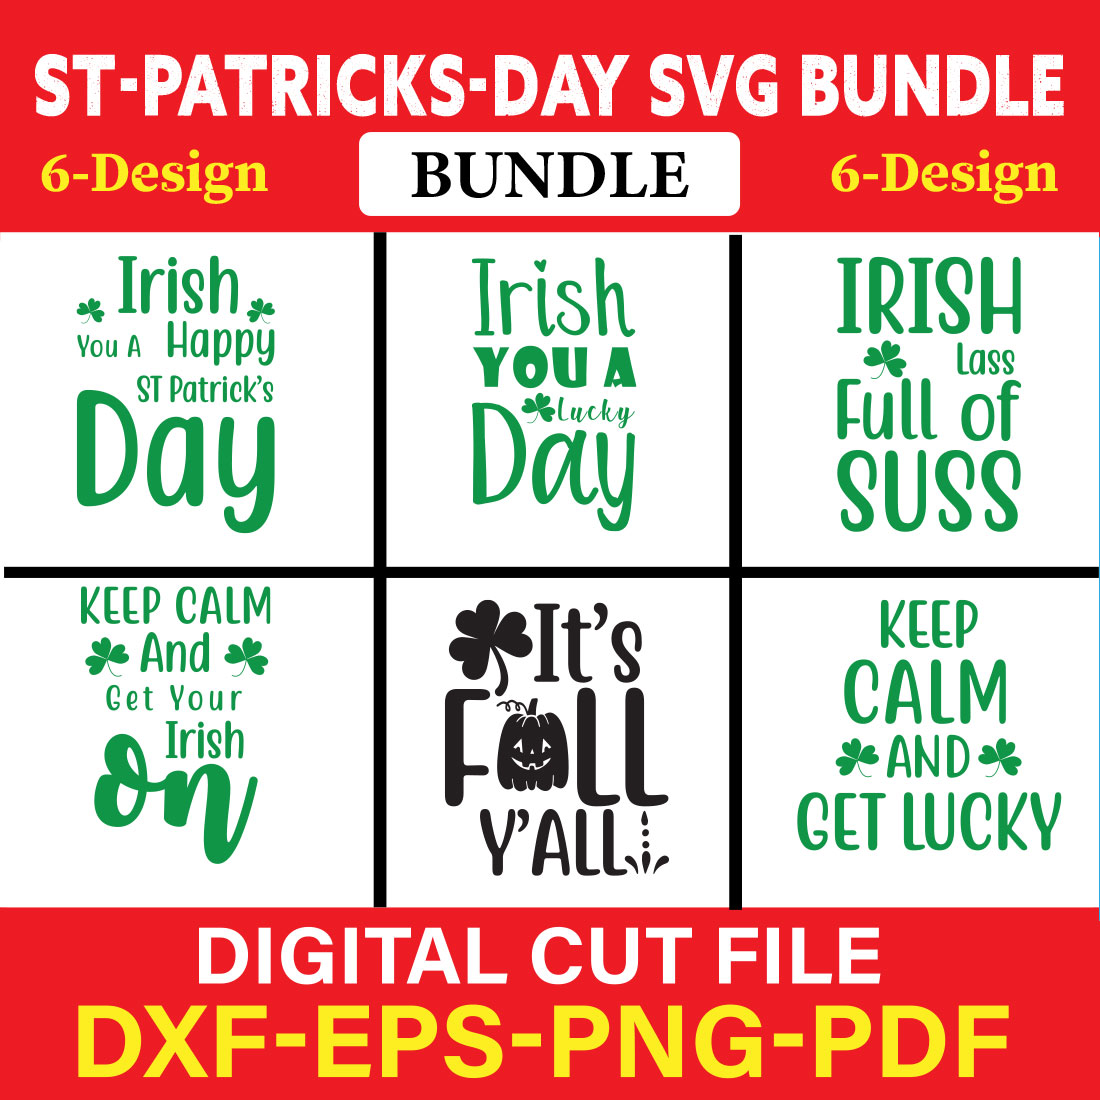 St-Patricks Day T-shirt Design Bundle Vol-3 cover image.